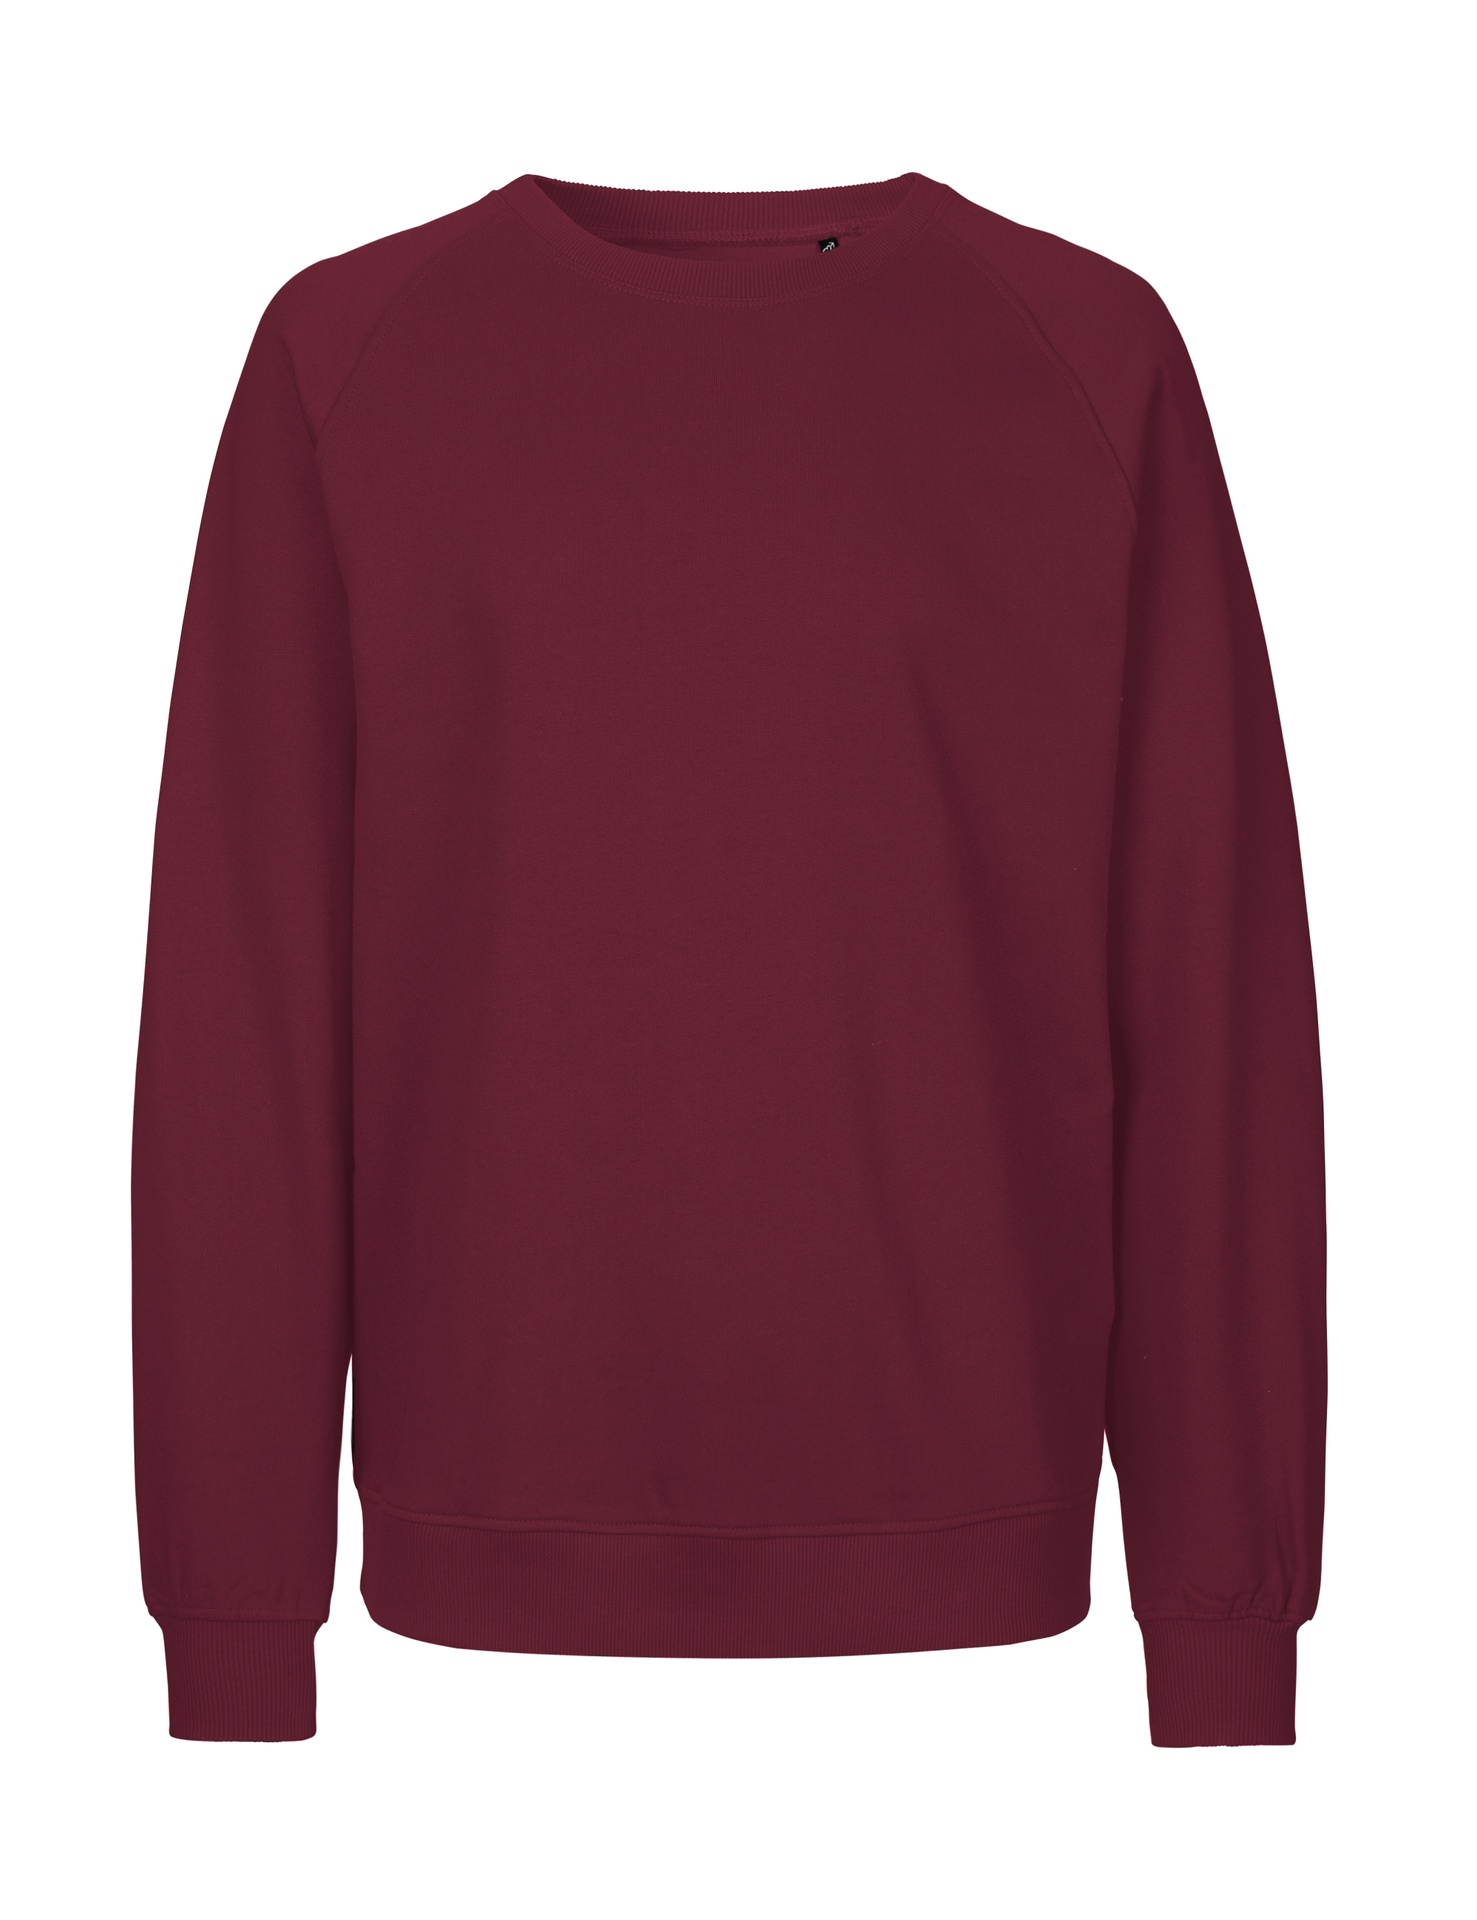 [PR/02761] Unisex Sweatshirt (Bordeaux 26, S)